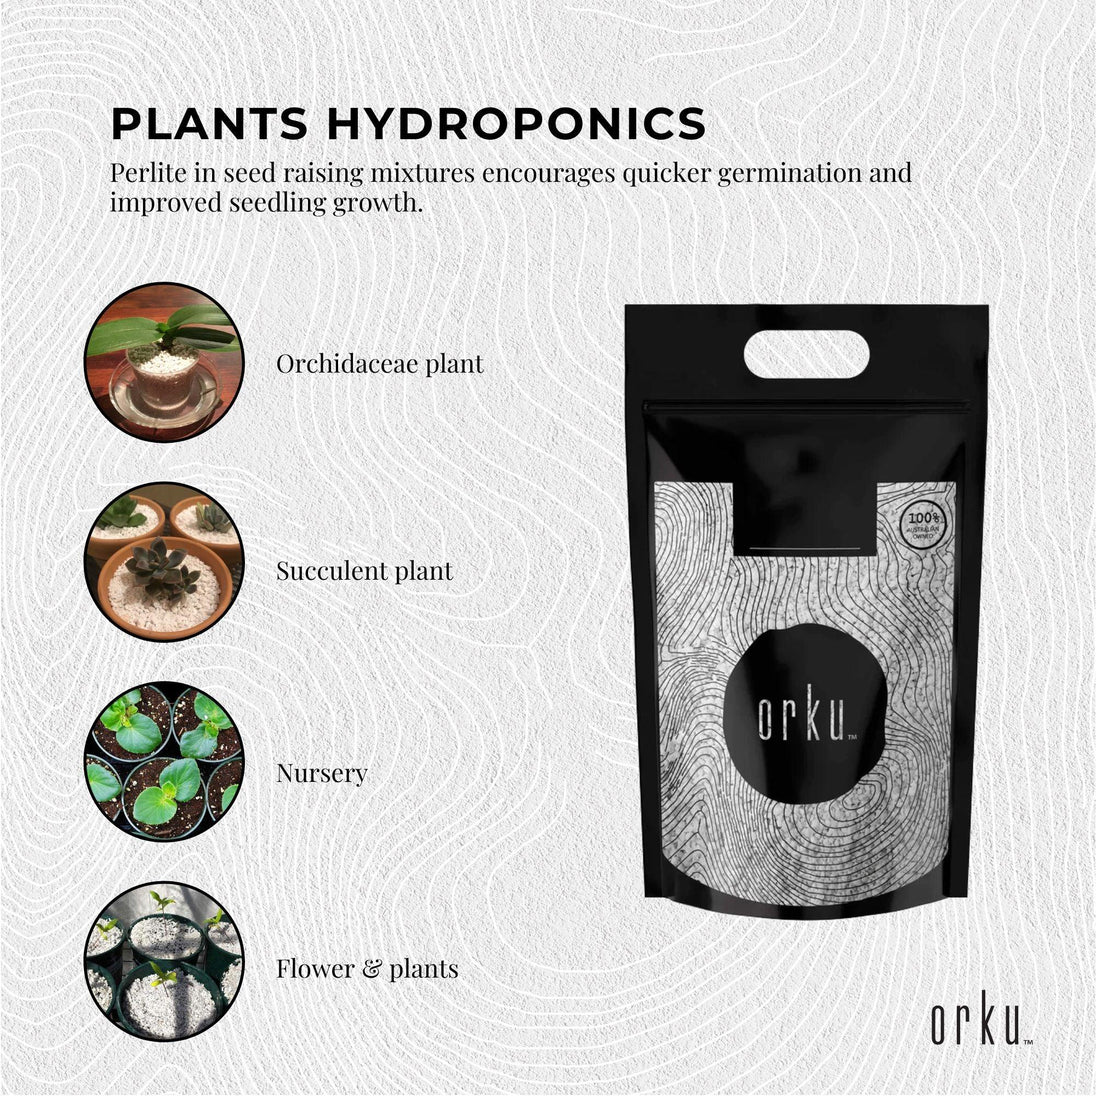 Buy 10L Perlite Coarse Premium Soil Expanded Medium Plants Hydroponics discounted | Products On Sale Australia